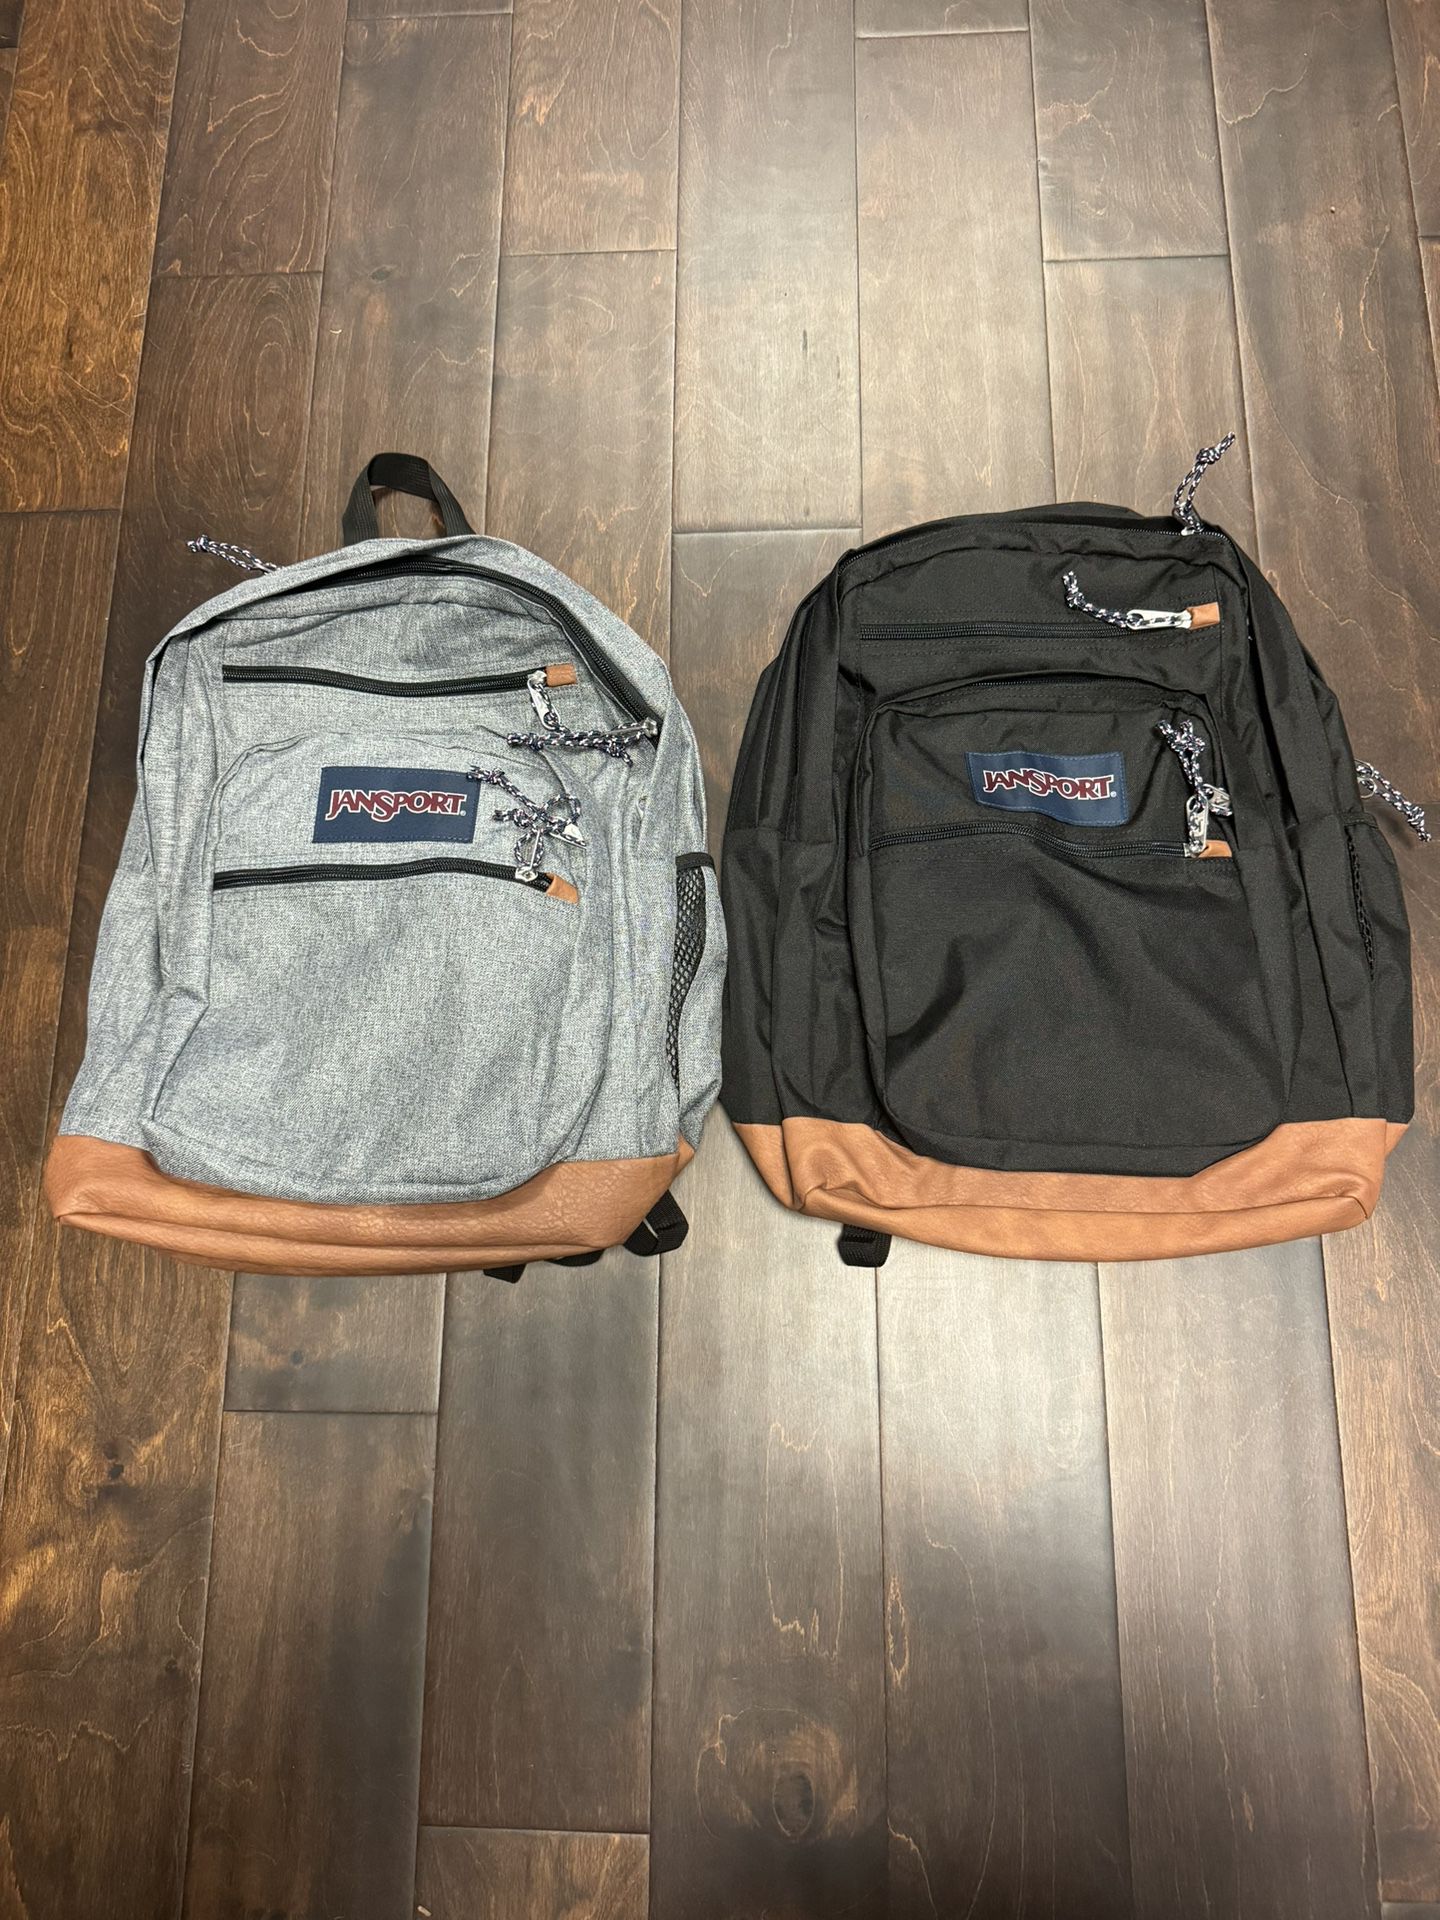 Jansport Backpacks ($40 For Both)